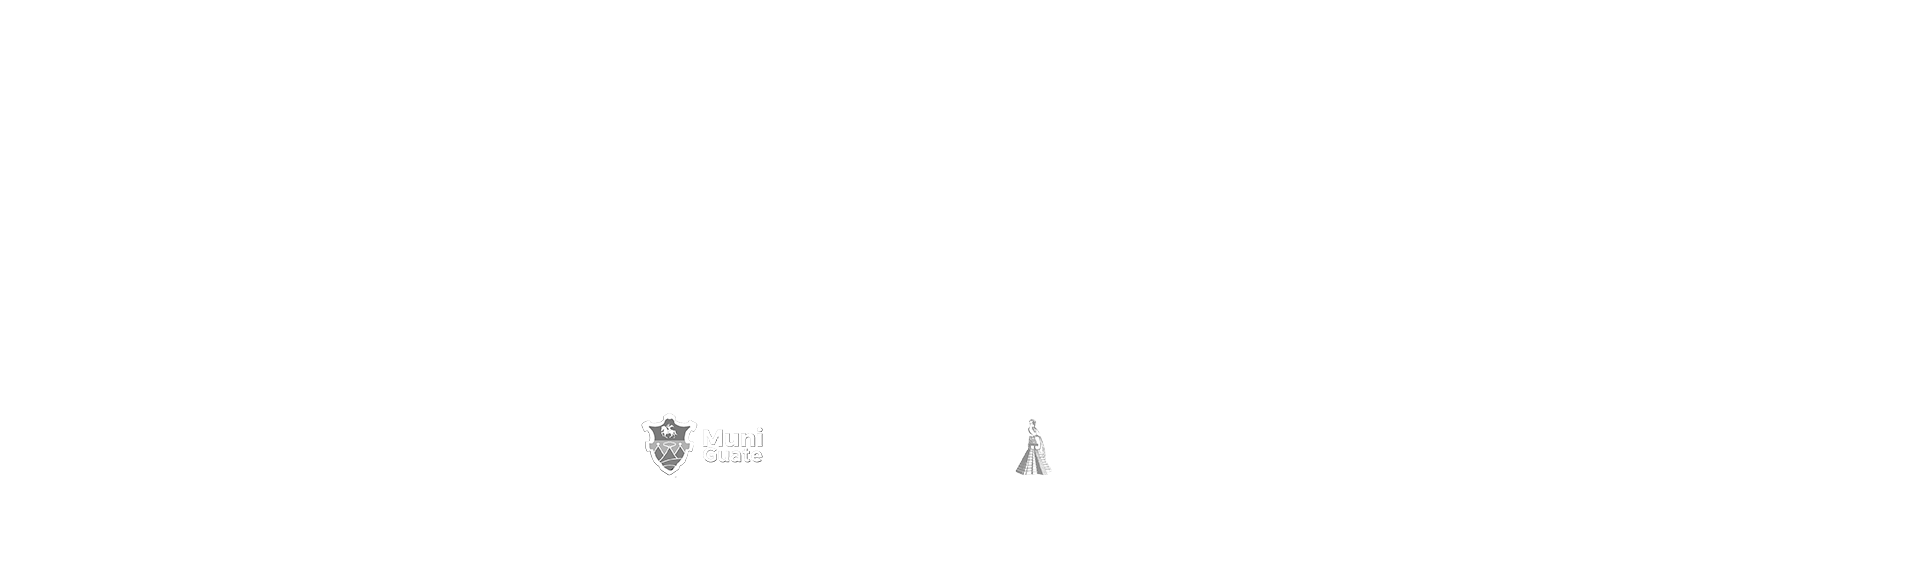 Guatemala Moving Forward